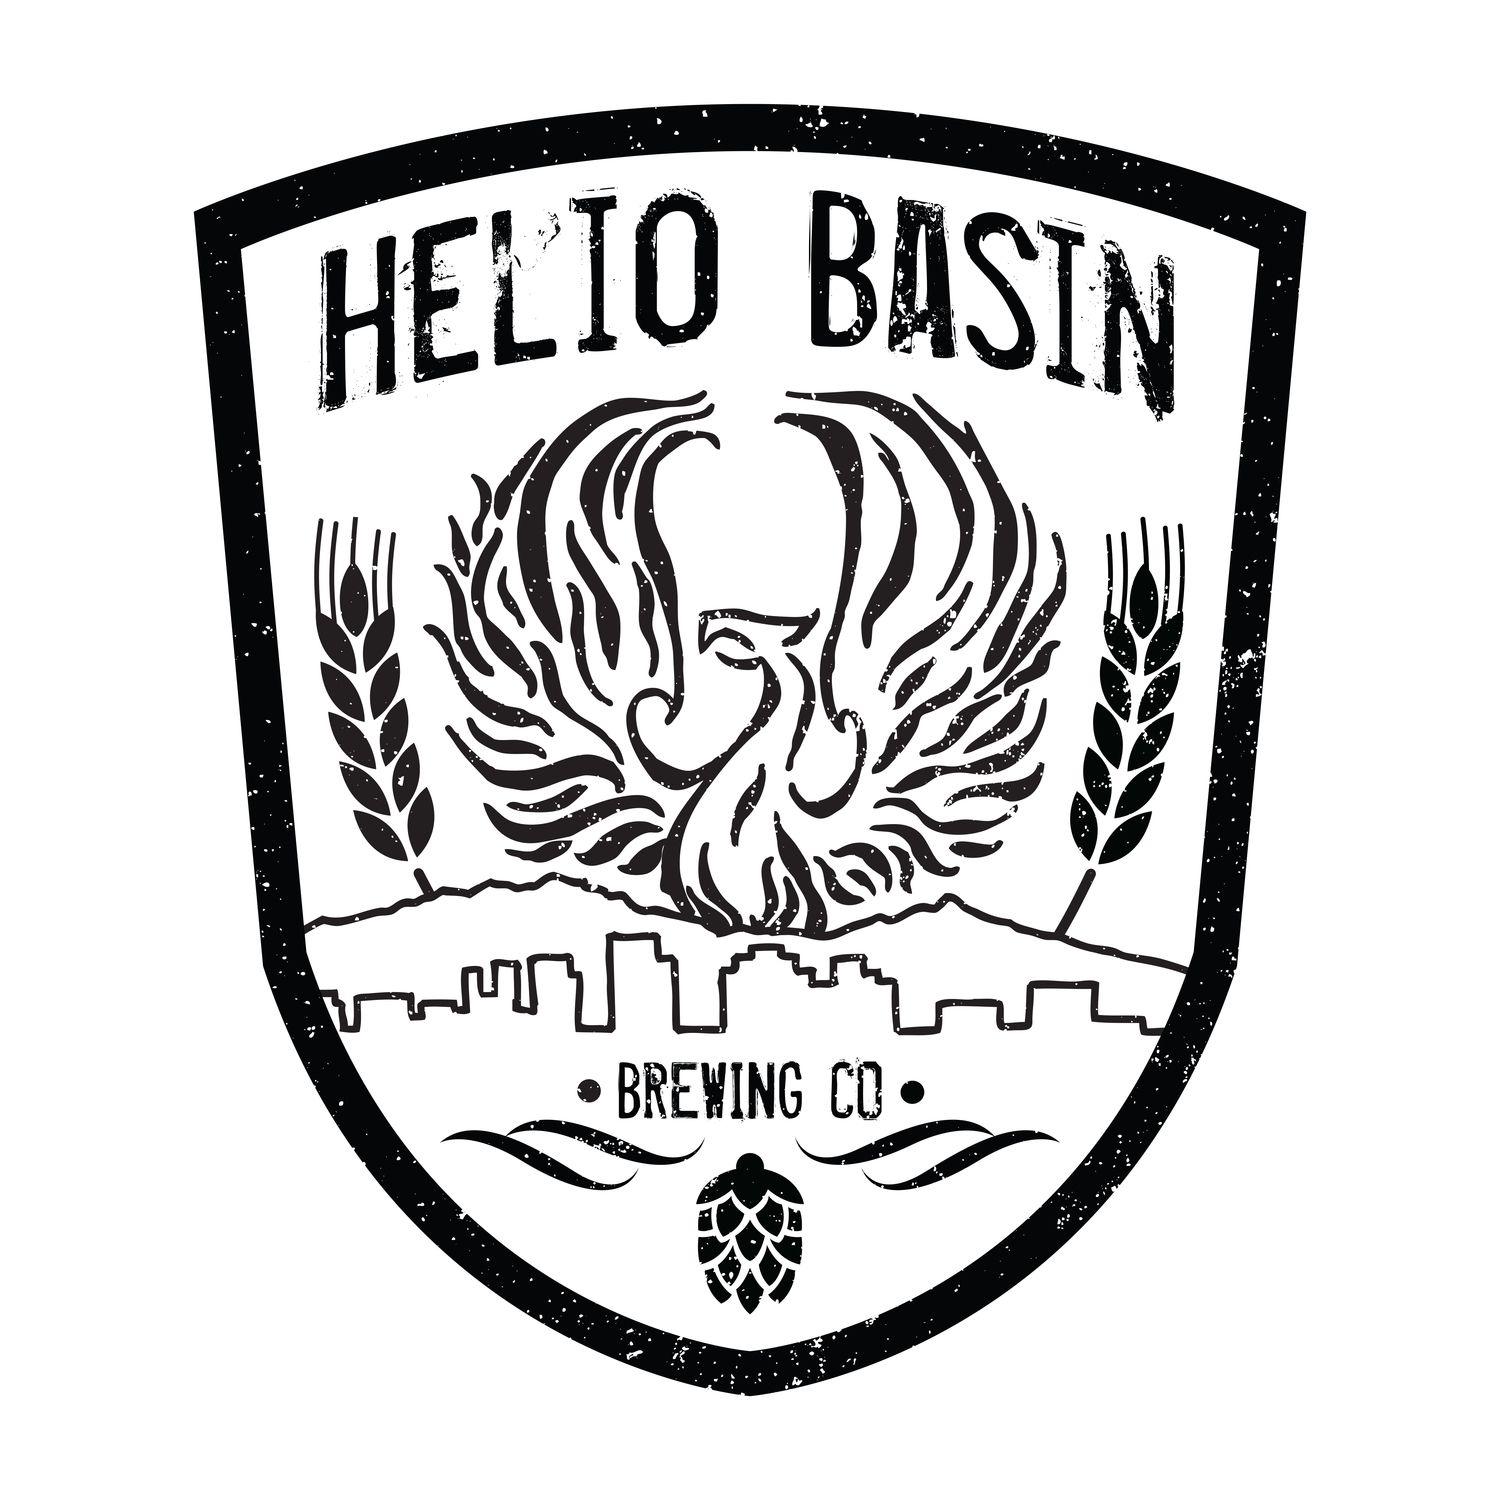 The Basin Logo - Helio Basin Brewing Co. Phoenix, Arizona